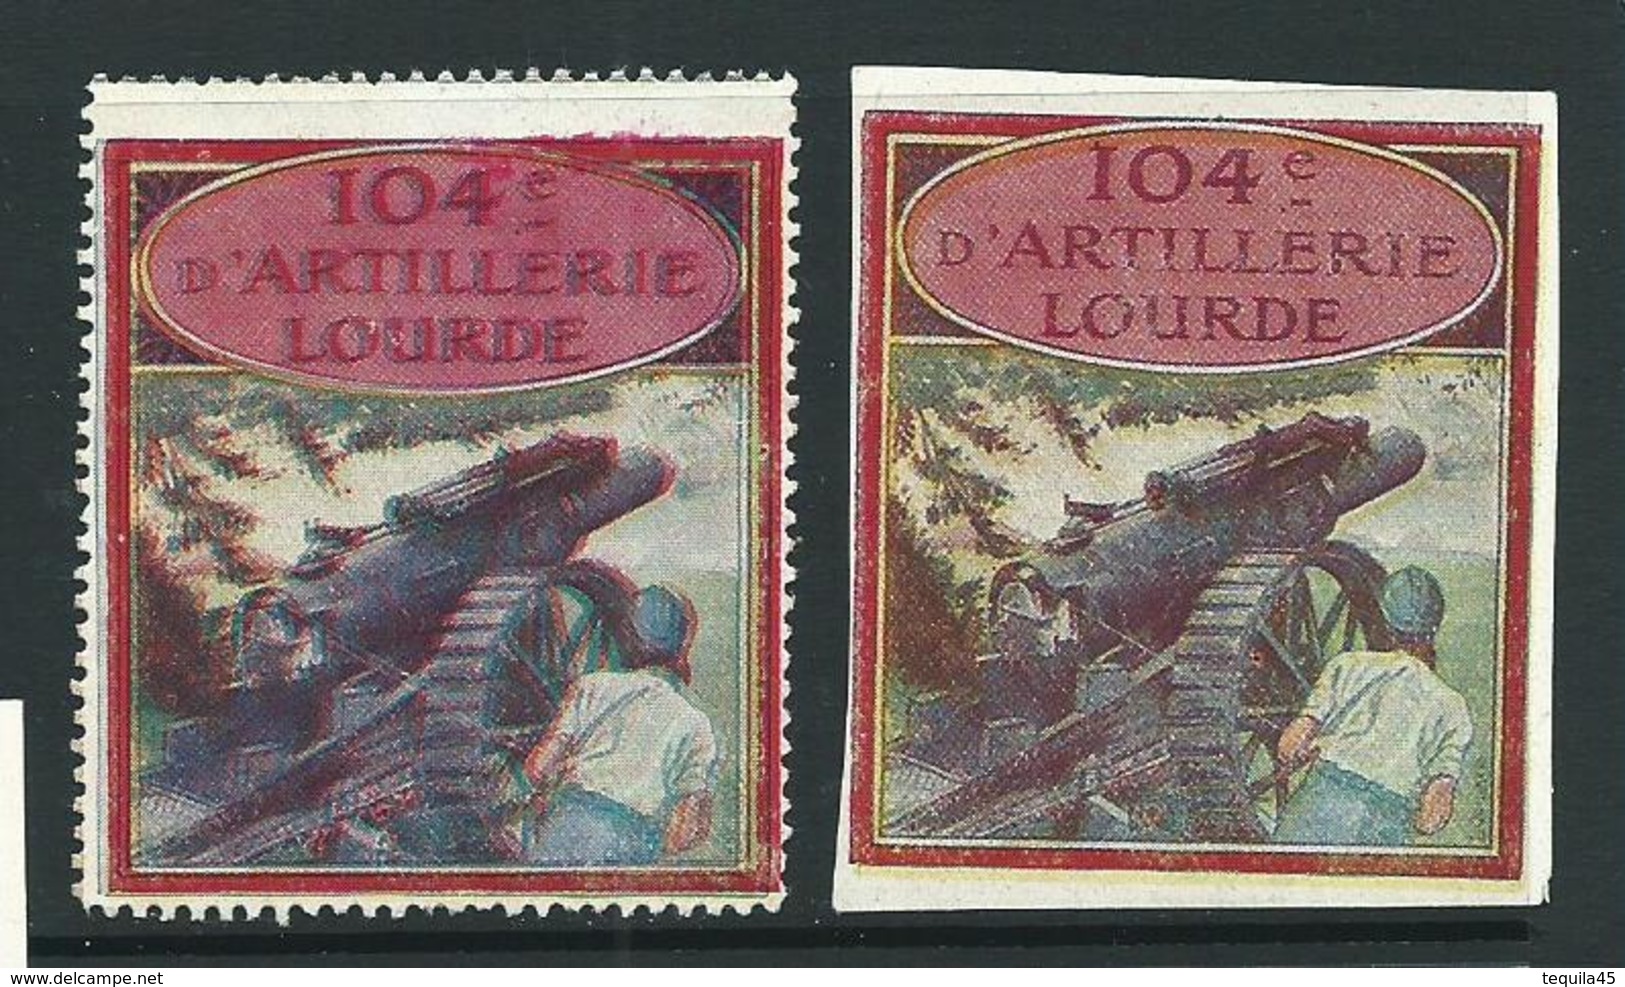 FRANCE VIGNETTE DELANDRE Rare : 104 ème Artillerie Lourde WWI WW1 Guerre Cinderella 1914 1918 Poster Stamp - Vignettes Militaires